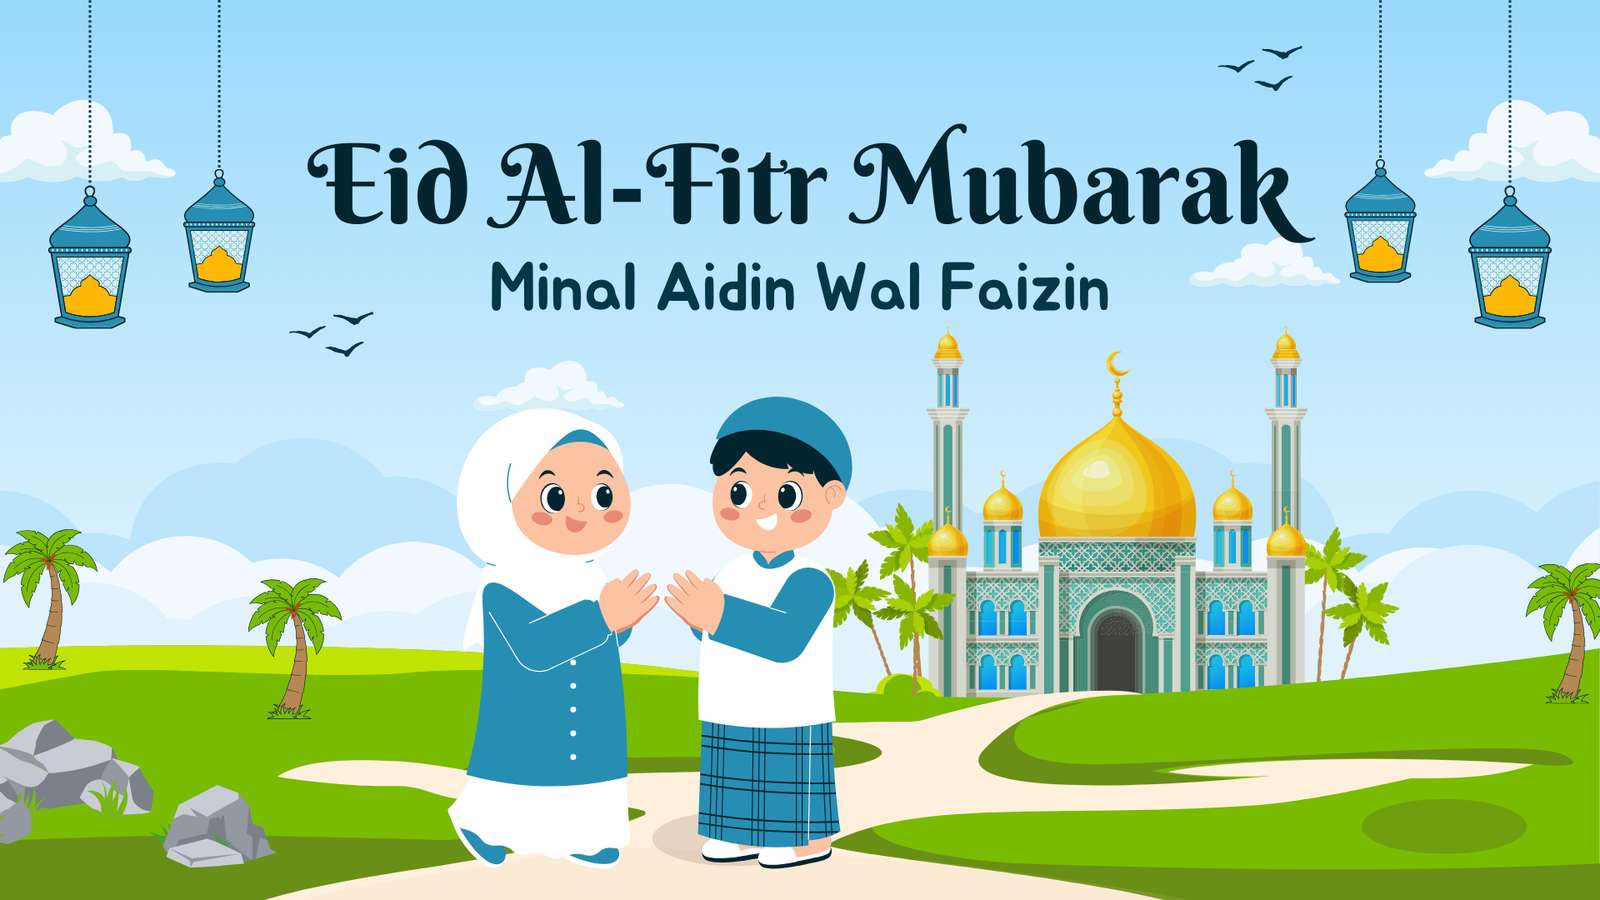 Eid AL FITR puzzle online a partir de fotografia